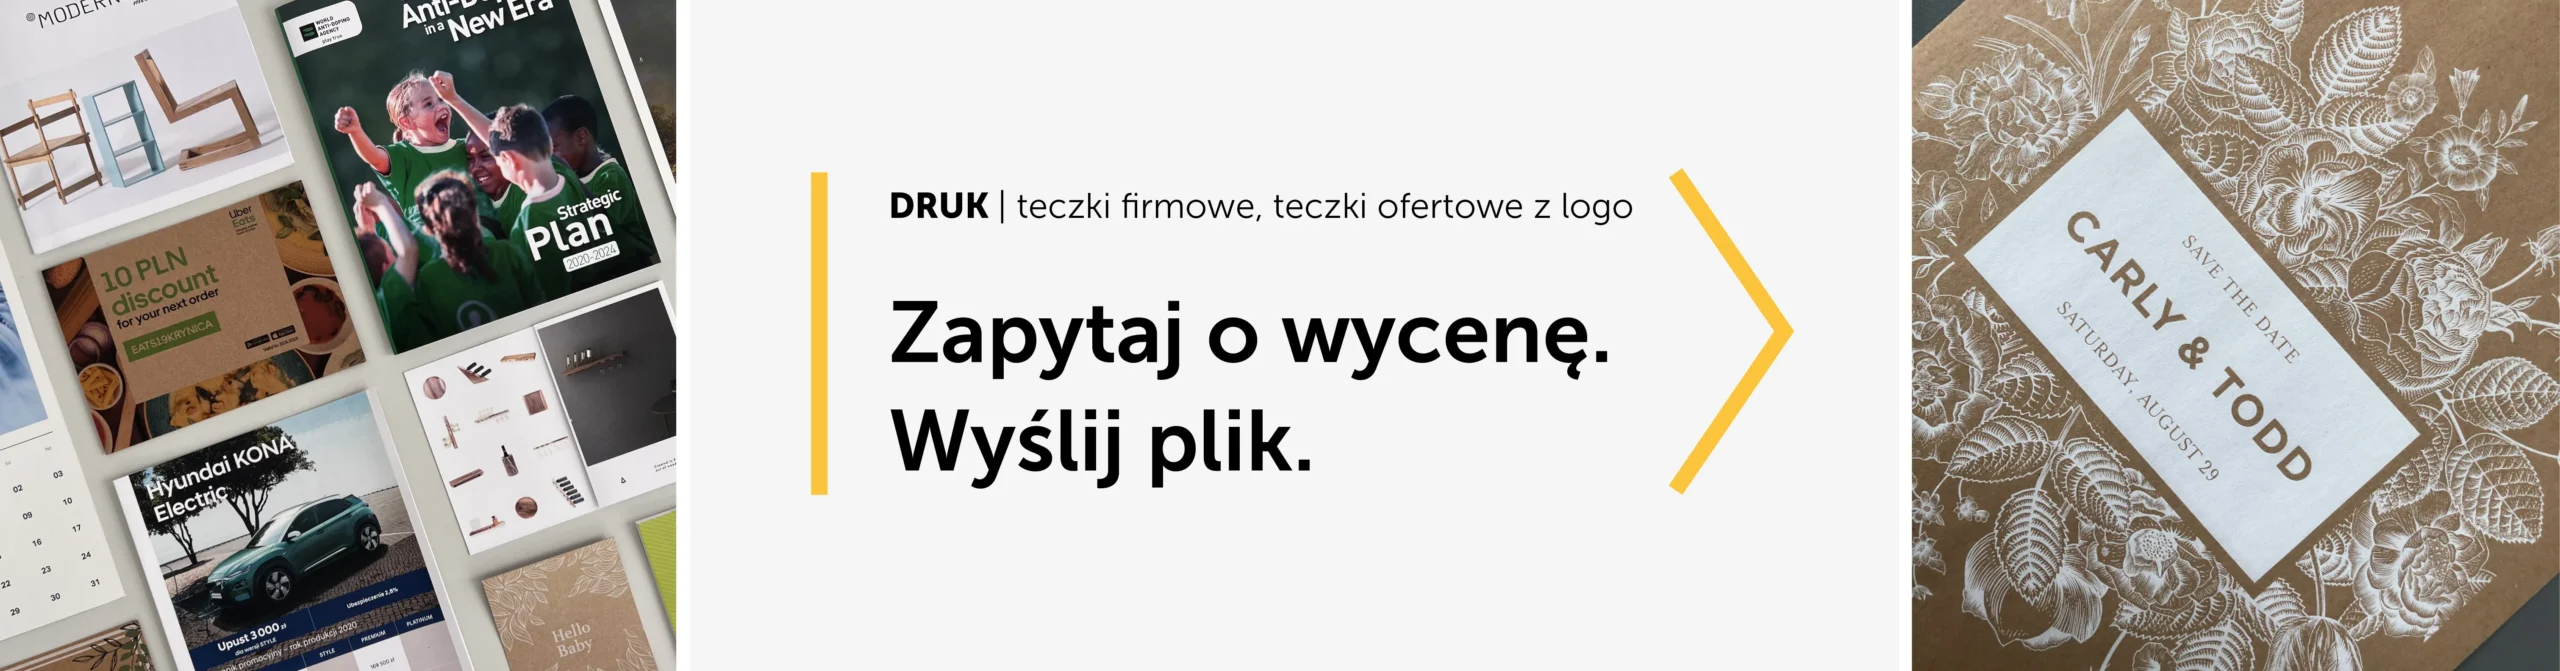 Drukarnia Warszawa – drukarnia reklamowa – drukarnia offsetowa i cyfrowa – GraffPrint.pl